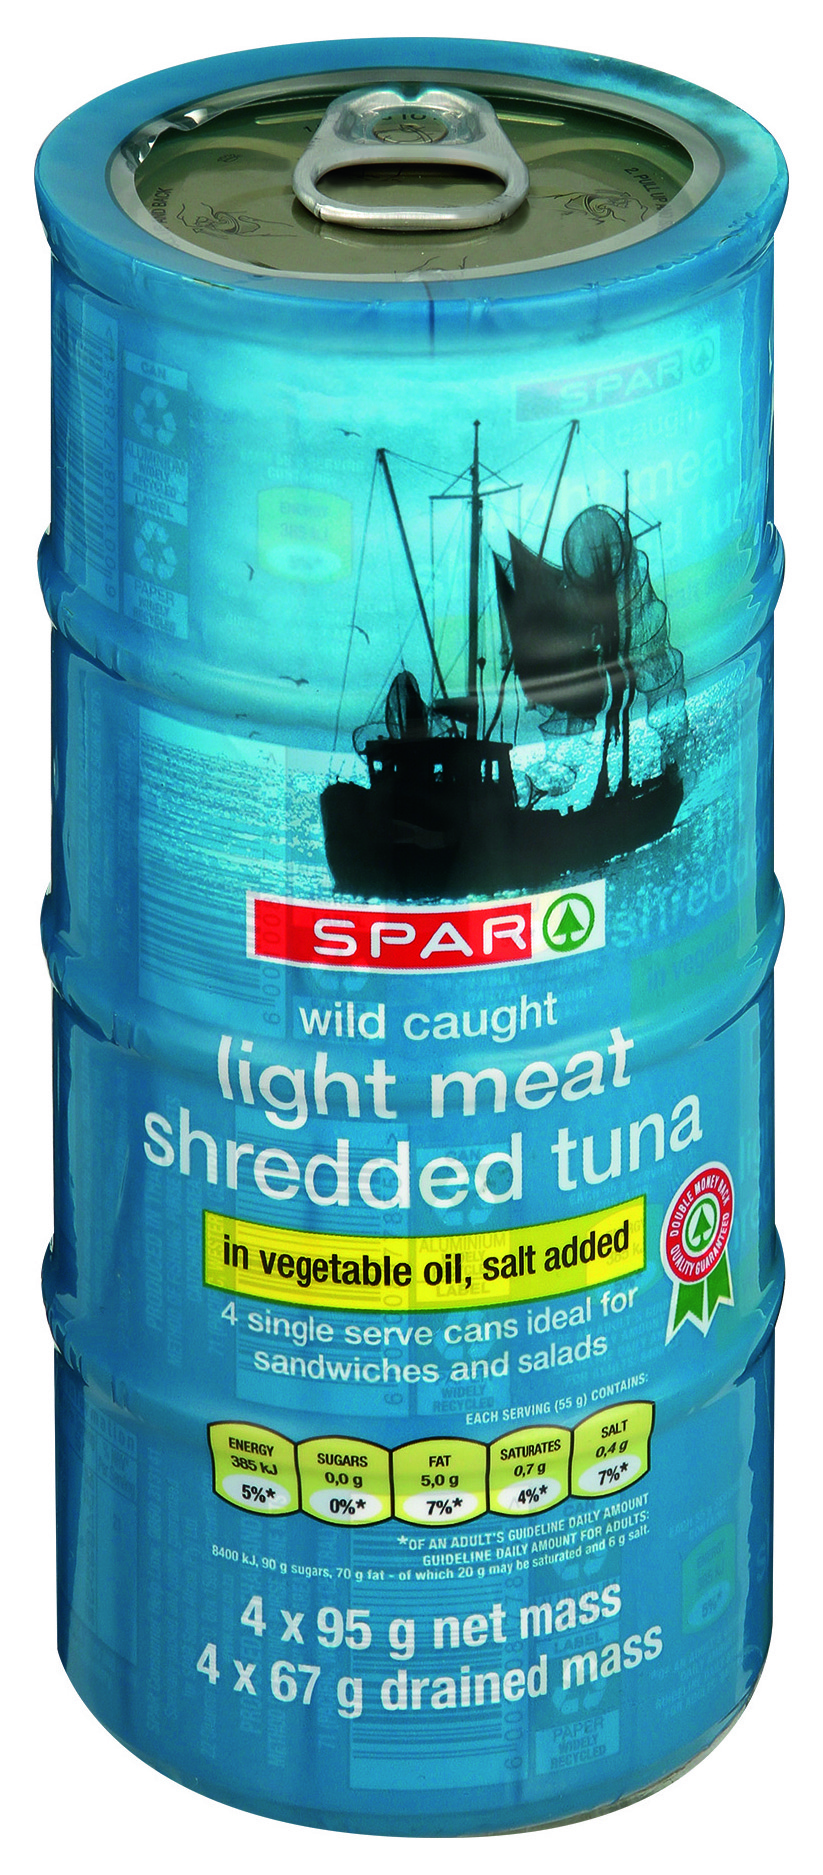 shredded tuna in vegetable oil